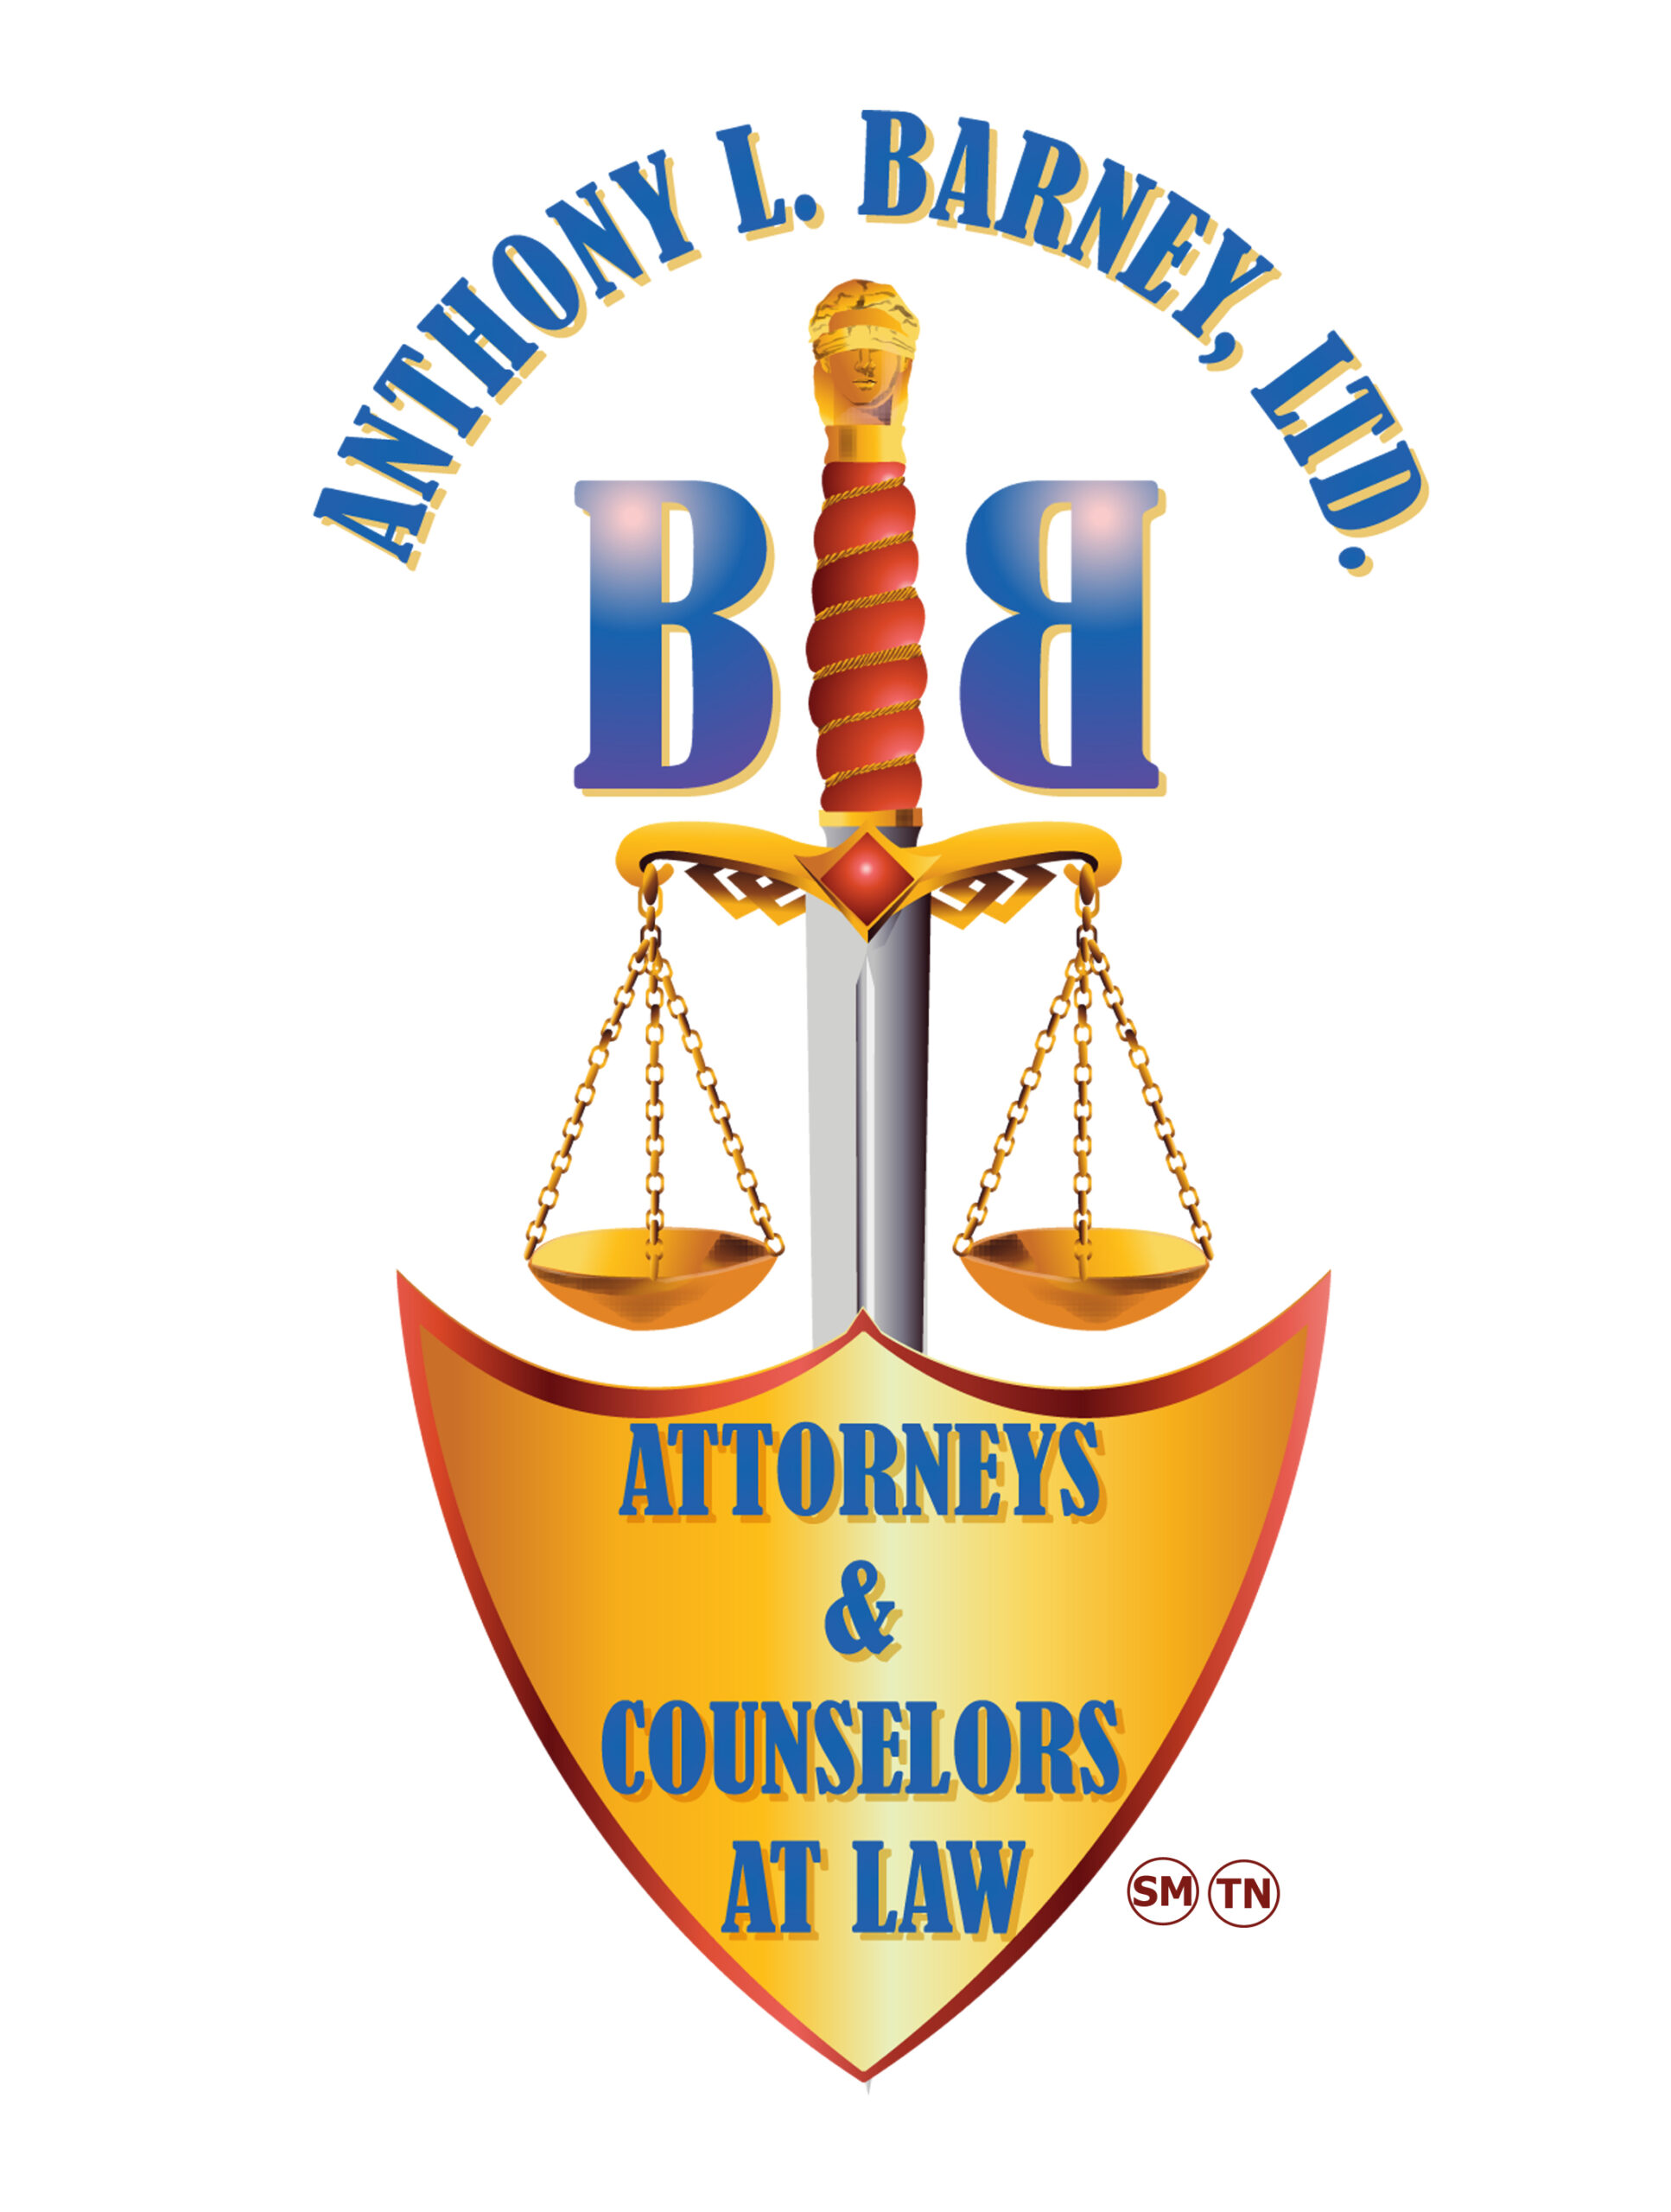 Anthony L. Barney Ltd. logo with trade symbols